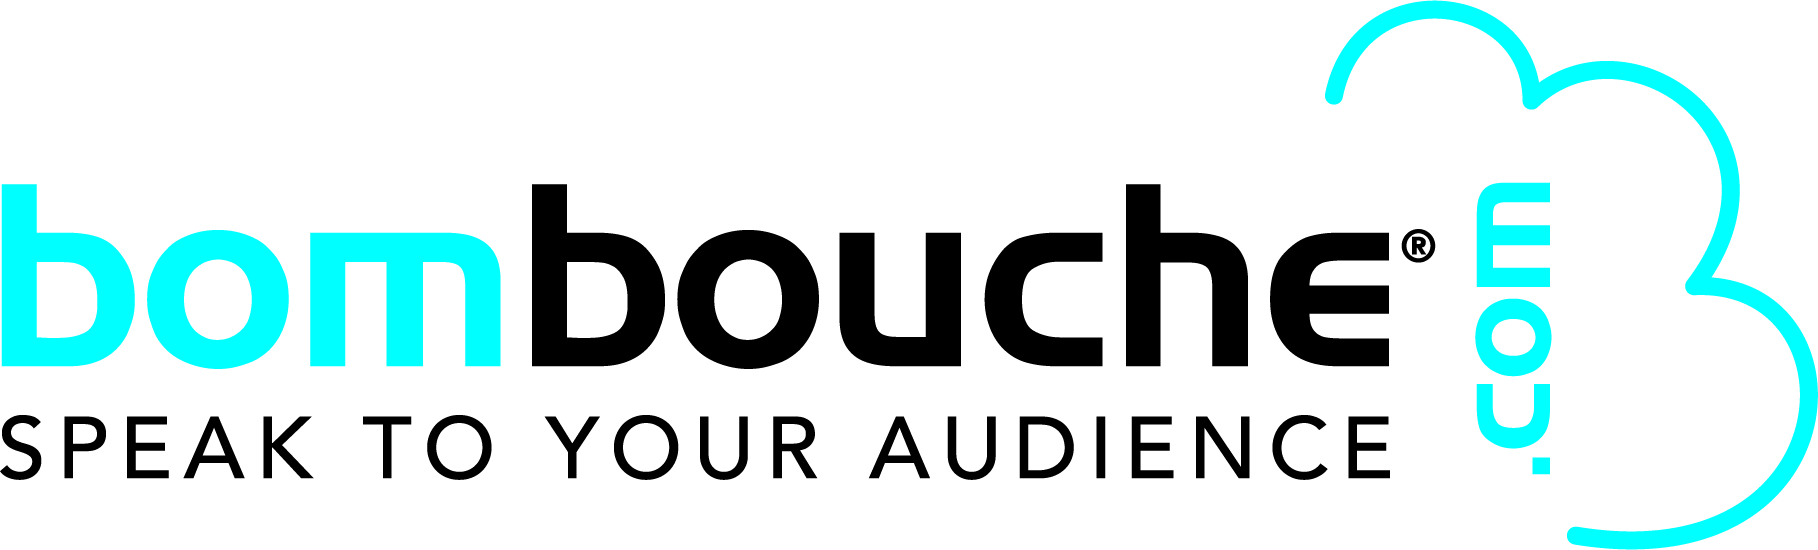 Bombouche Ltd